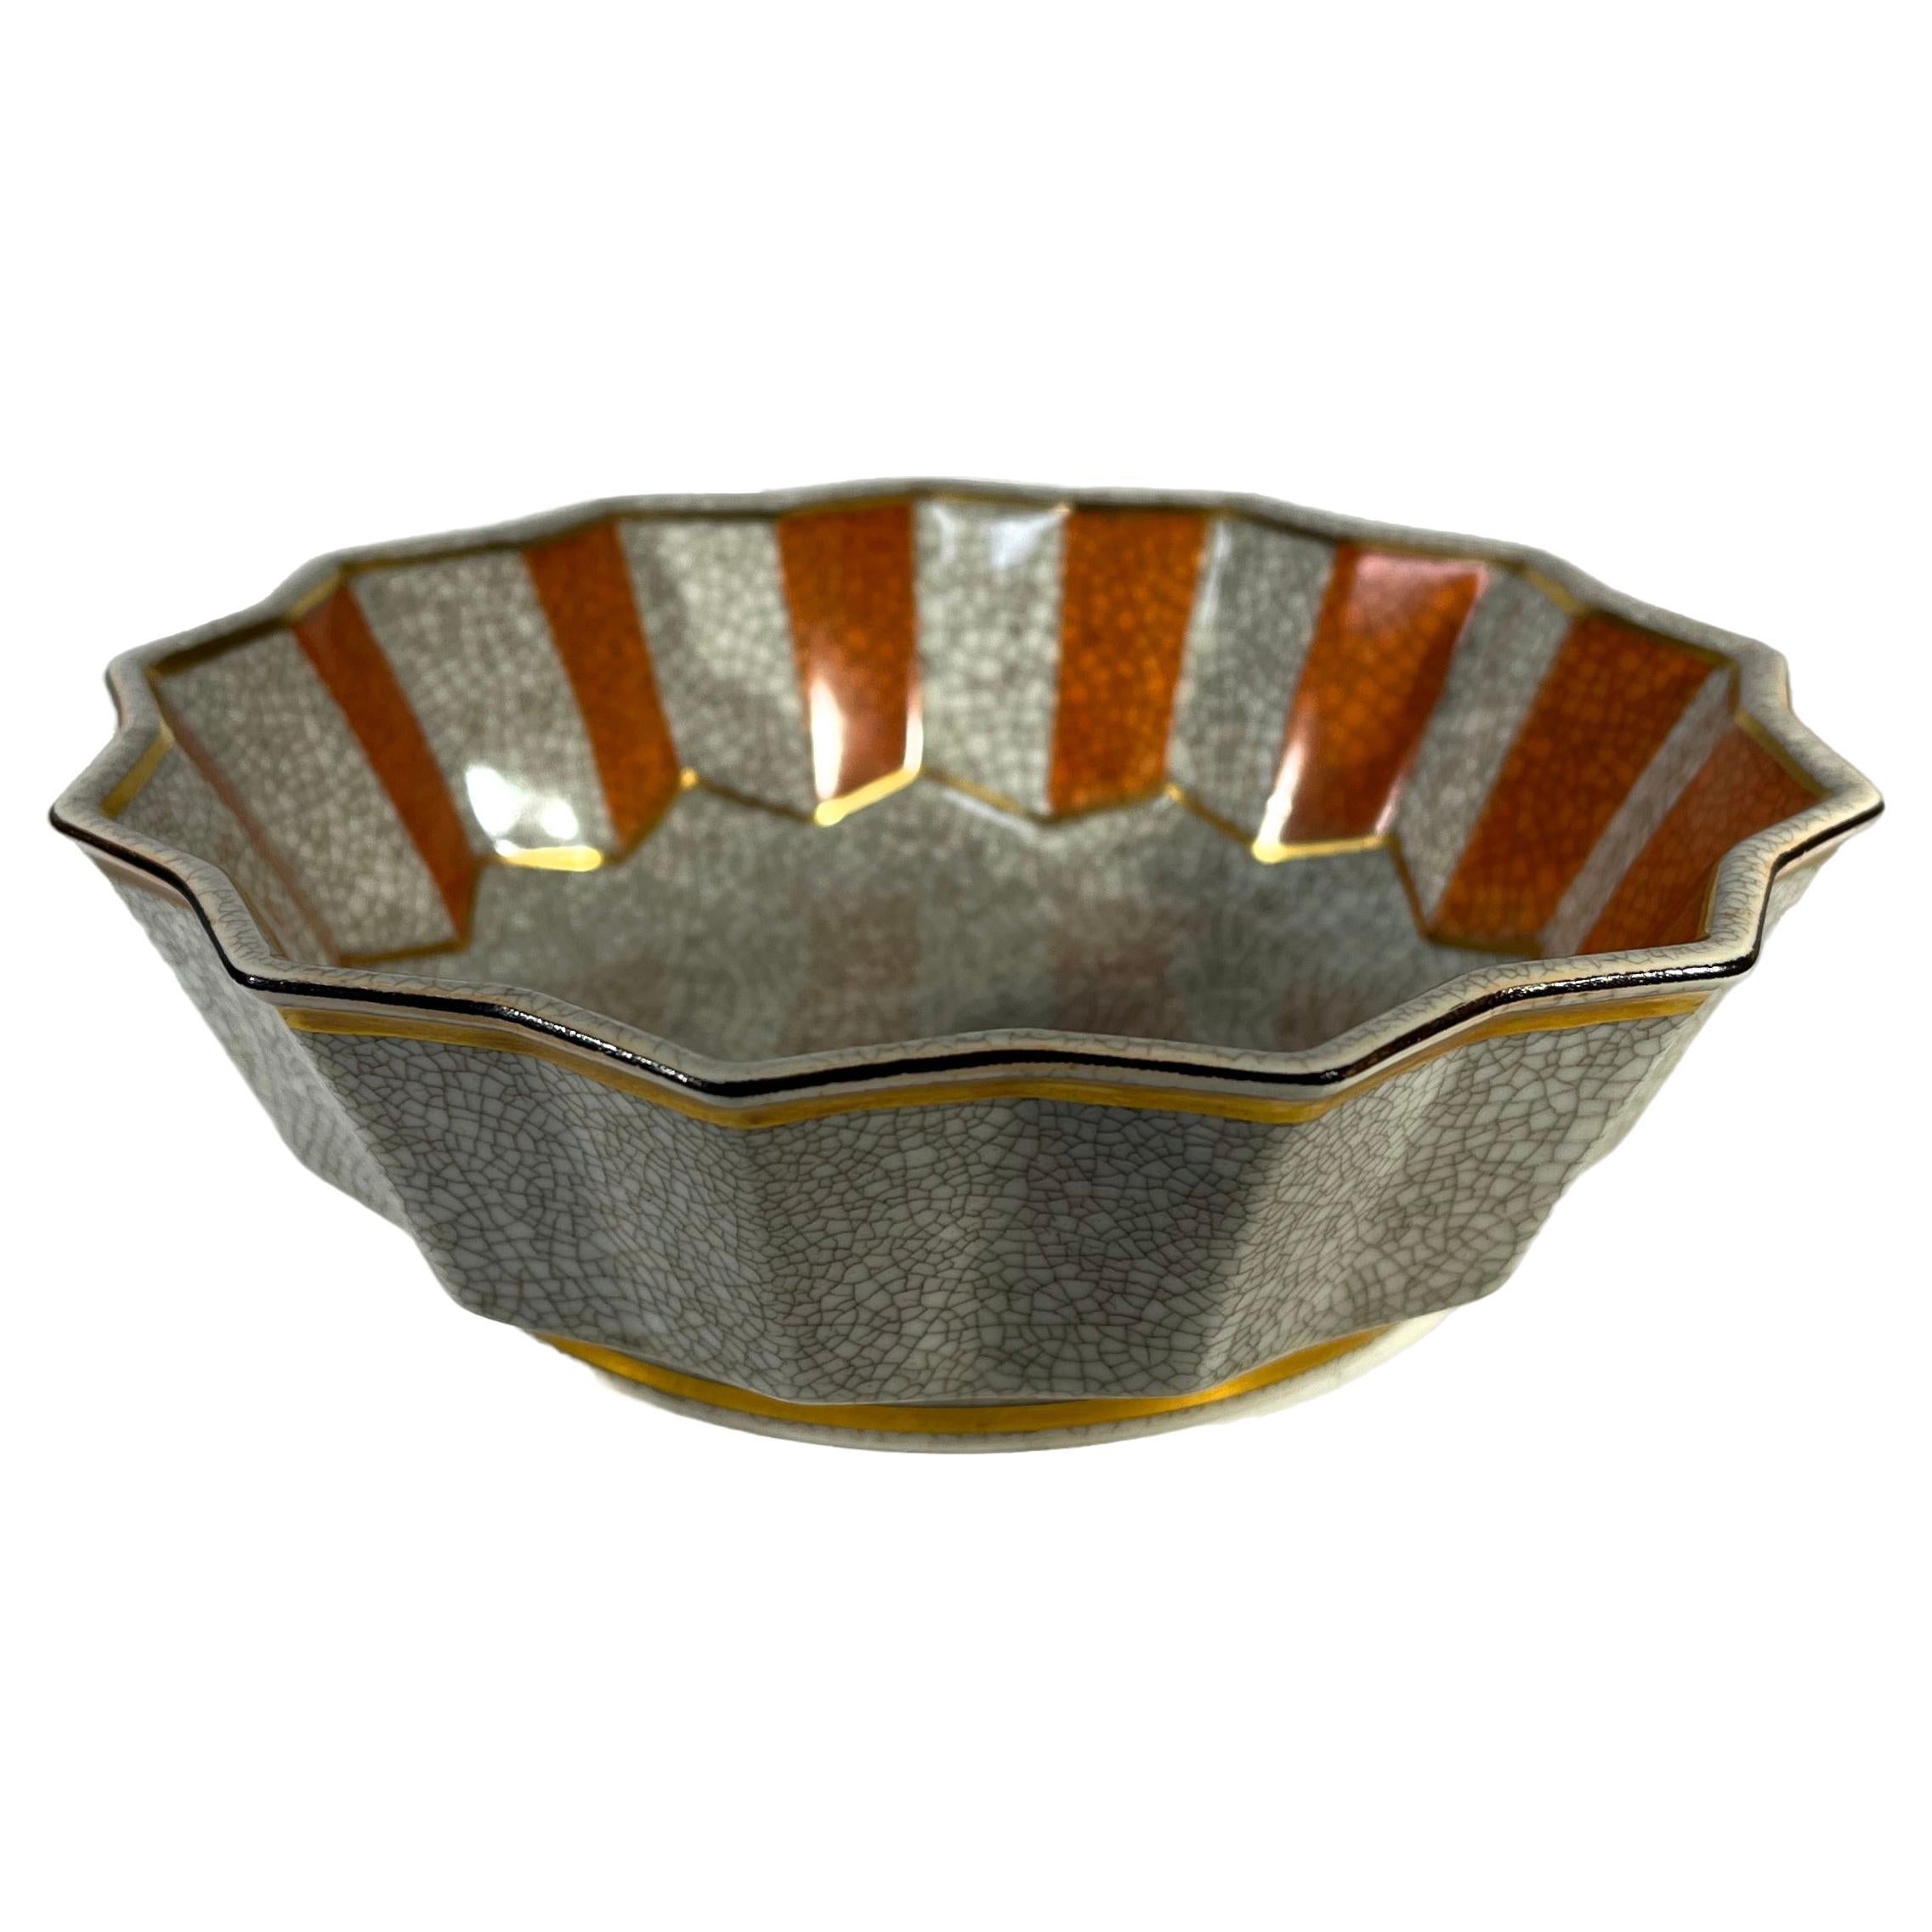 Thorkild Olsen, Royal Copenhagen 1953 Terracotta Grey Crackle Fluted Dish #3191 For Sale